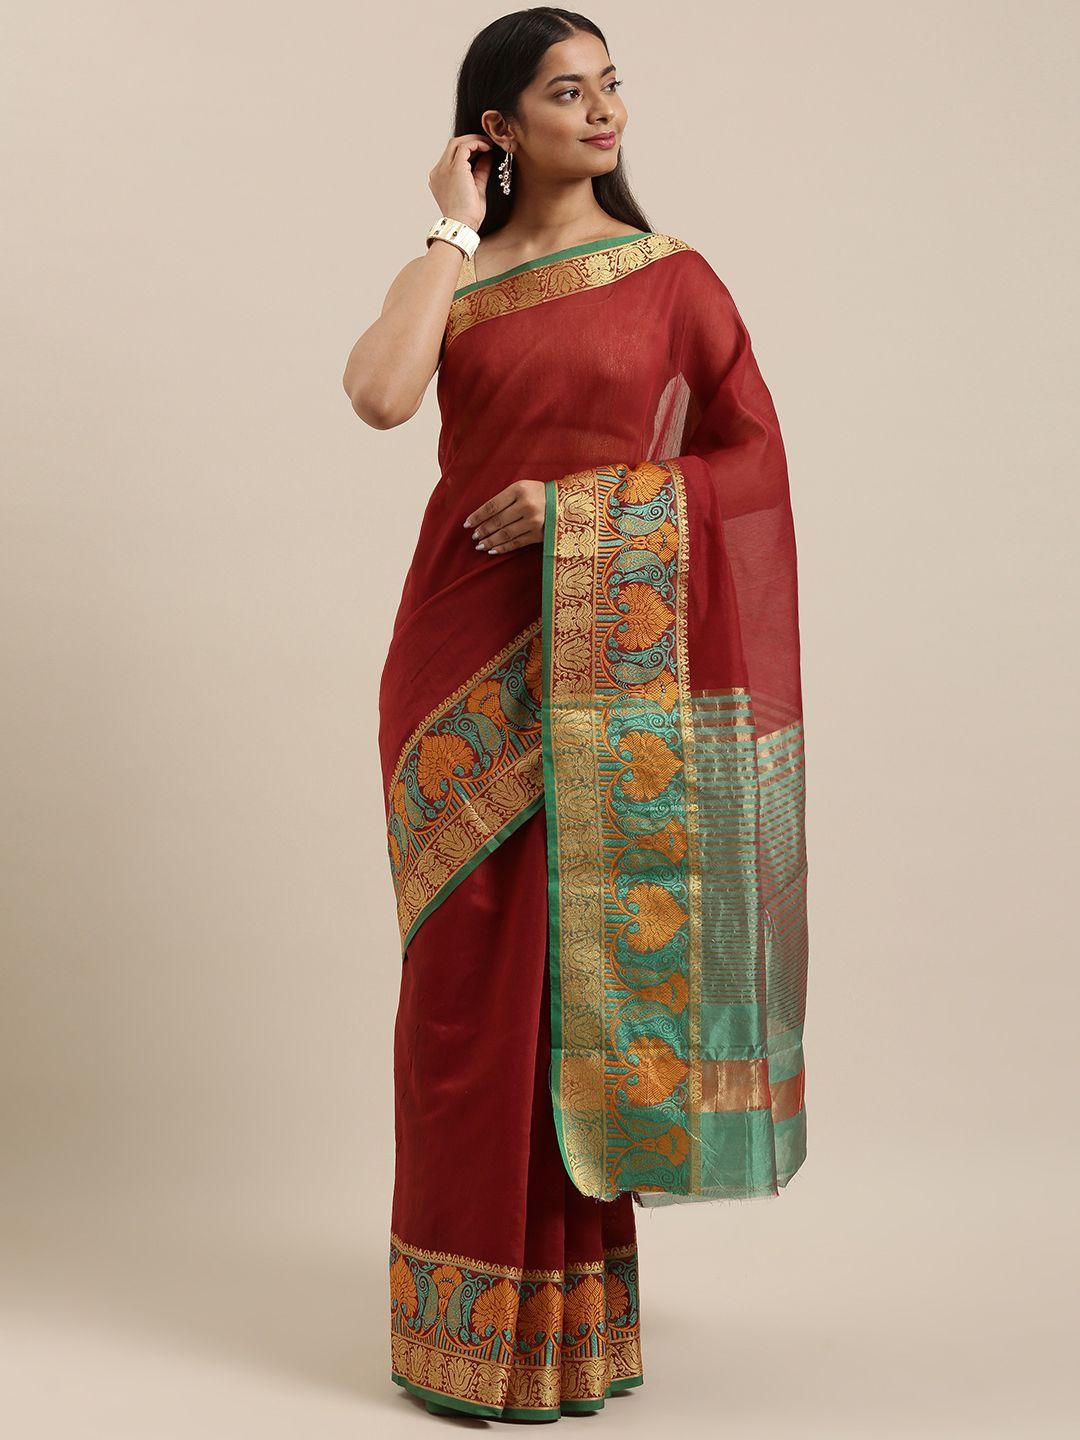 sangam prints maroon handloom saree